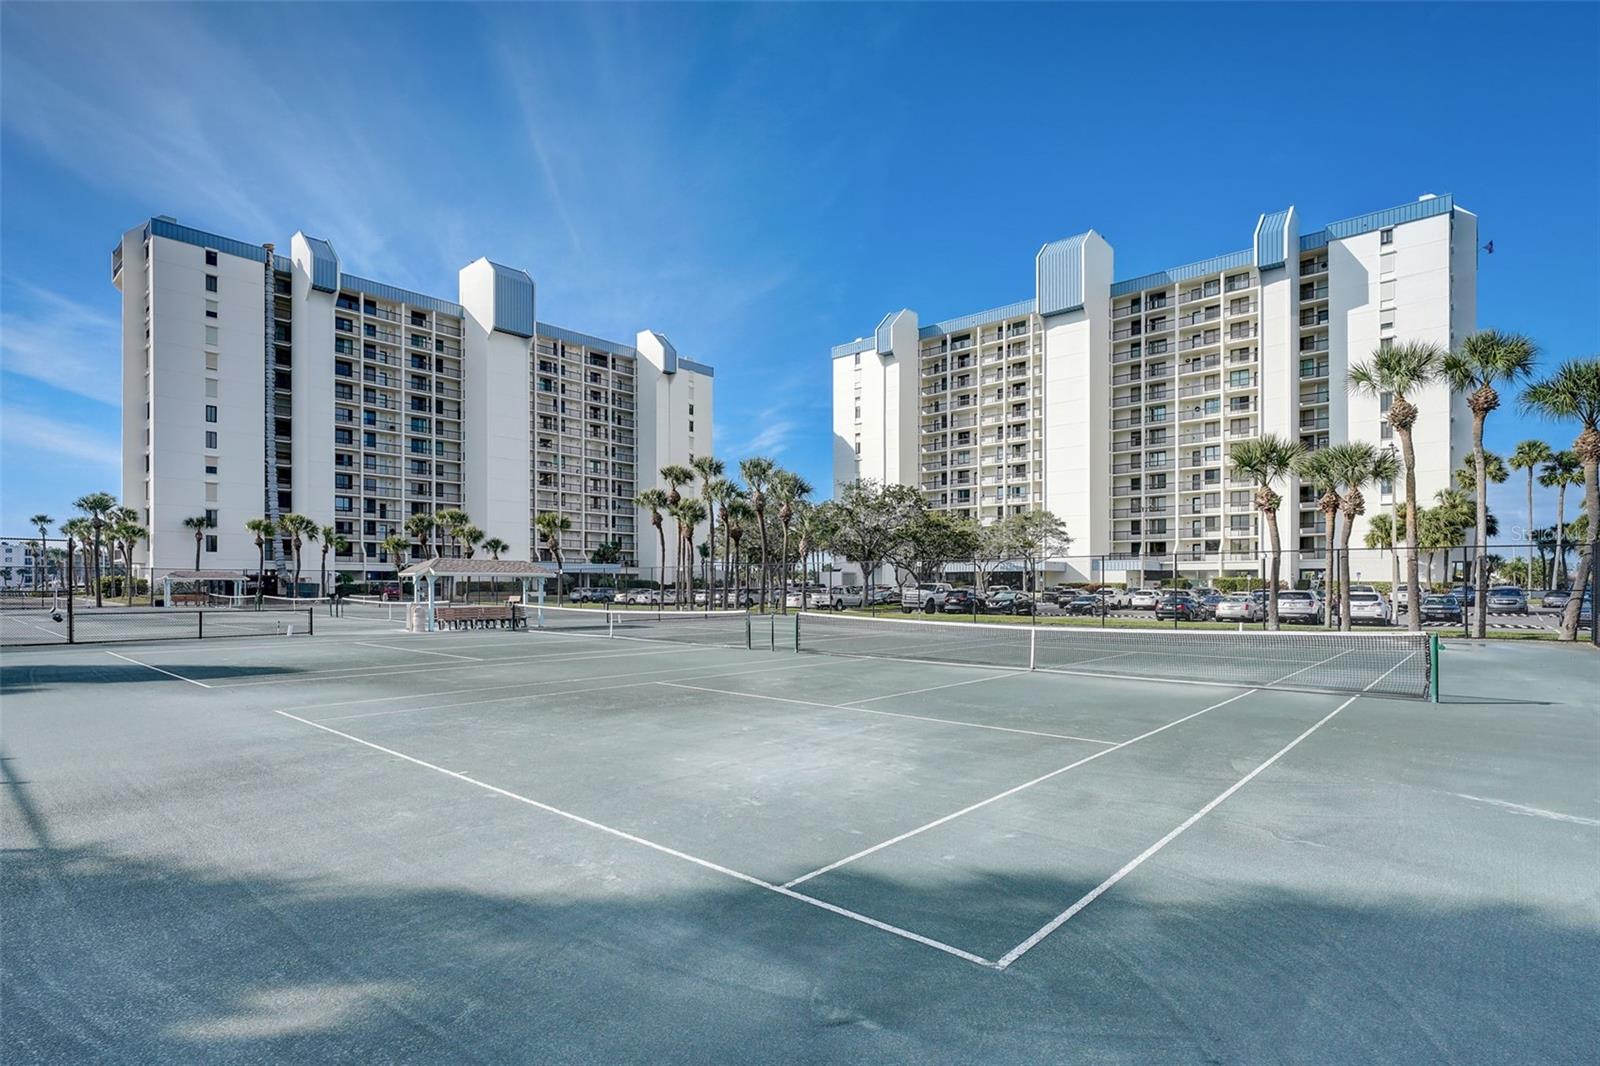 HarTru Tennis Courts